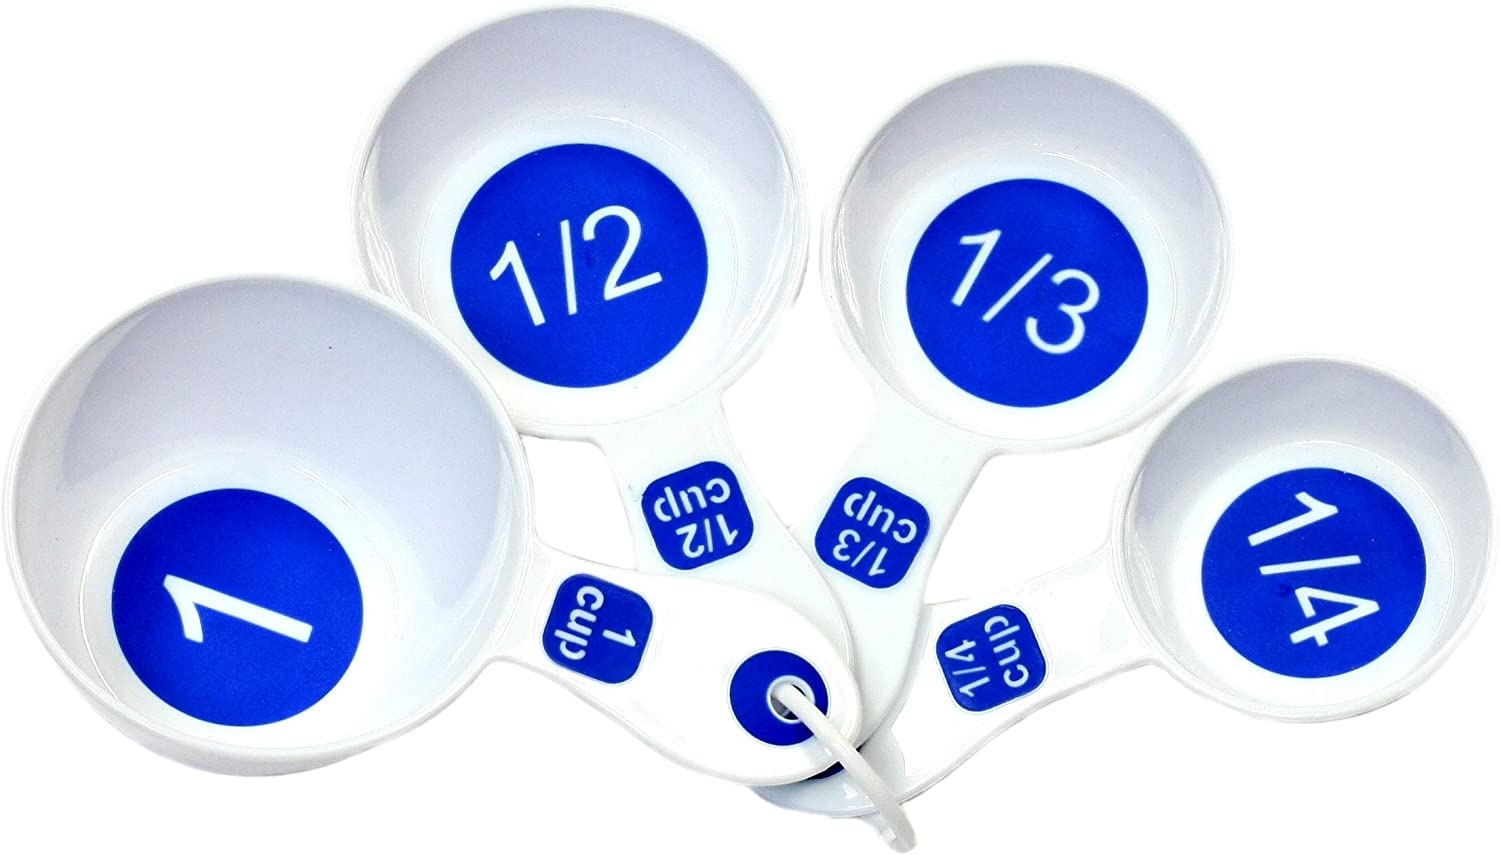 Chef Craft Select Plastic 6 Piece Measuring Spoon Set, 1/8 tsp, 1/4 tsp, 1/2 tsp, 1 tsp, 1/2 tbsp, 1 tbsp, White with Blue